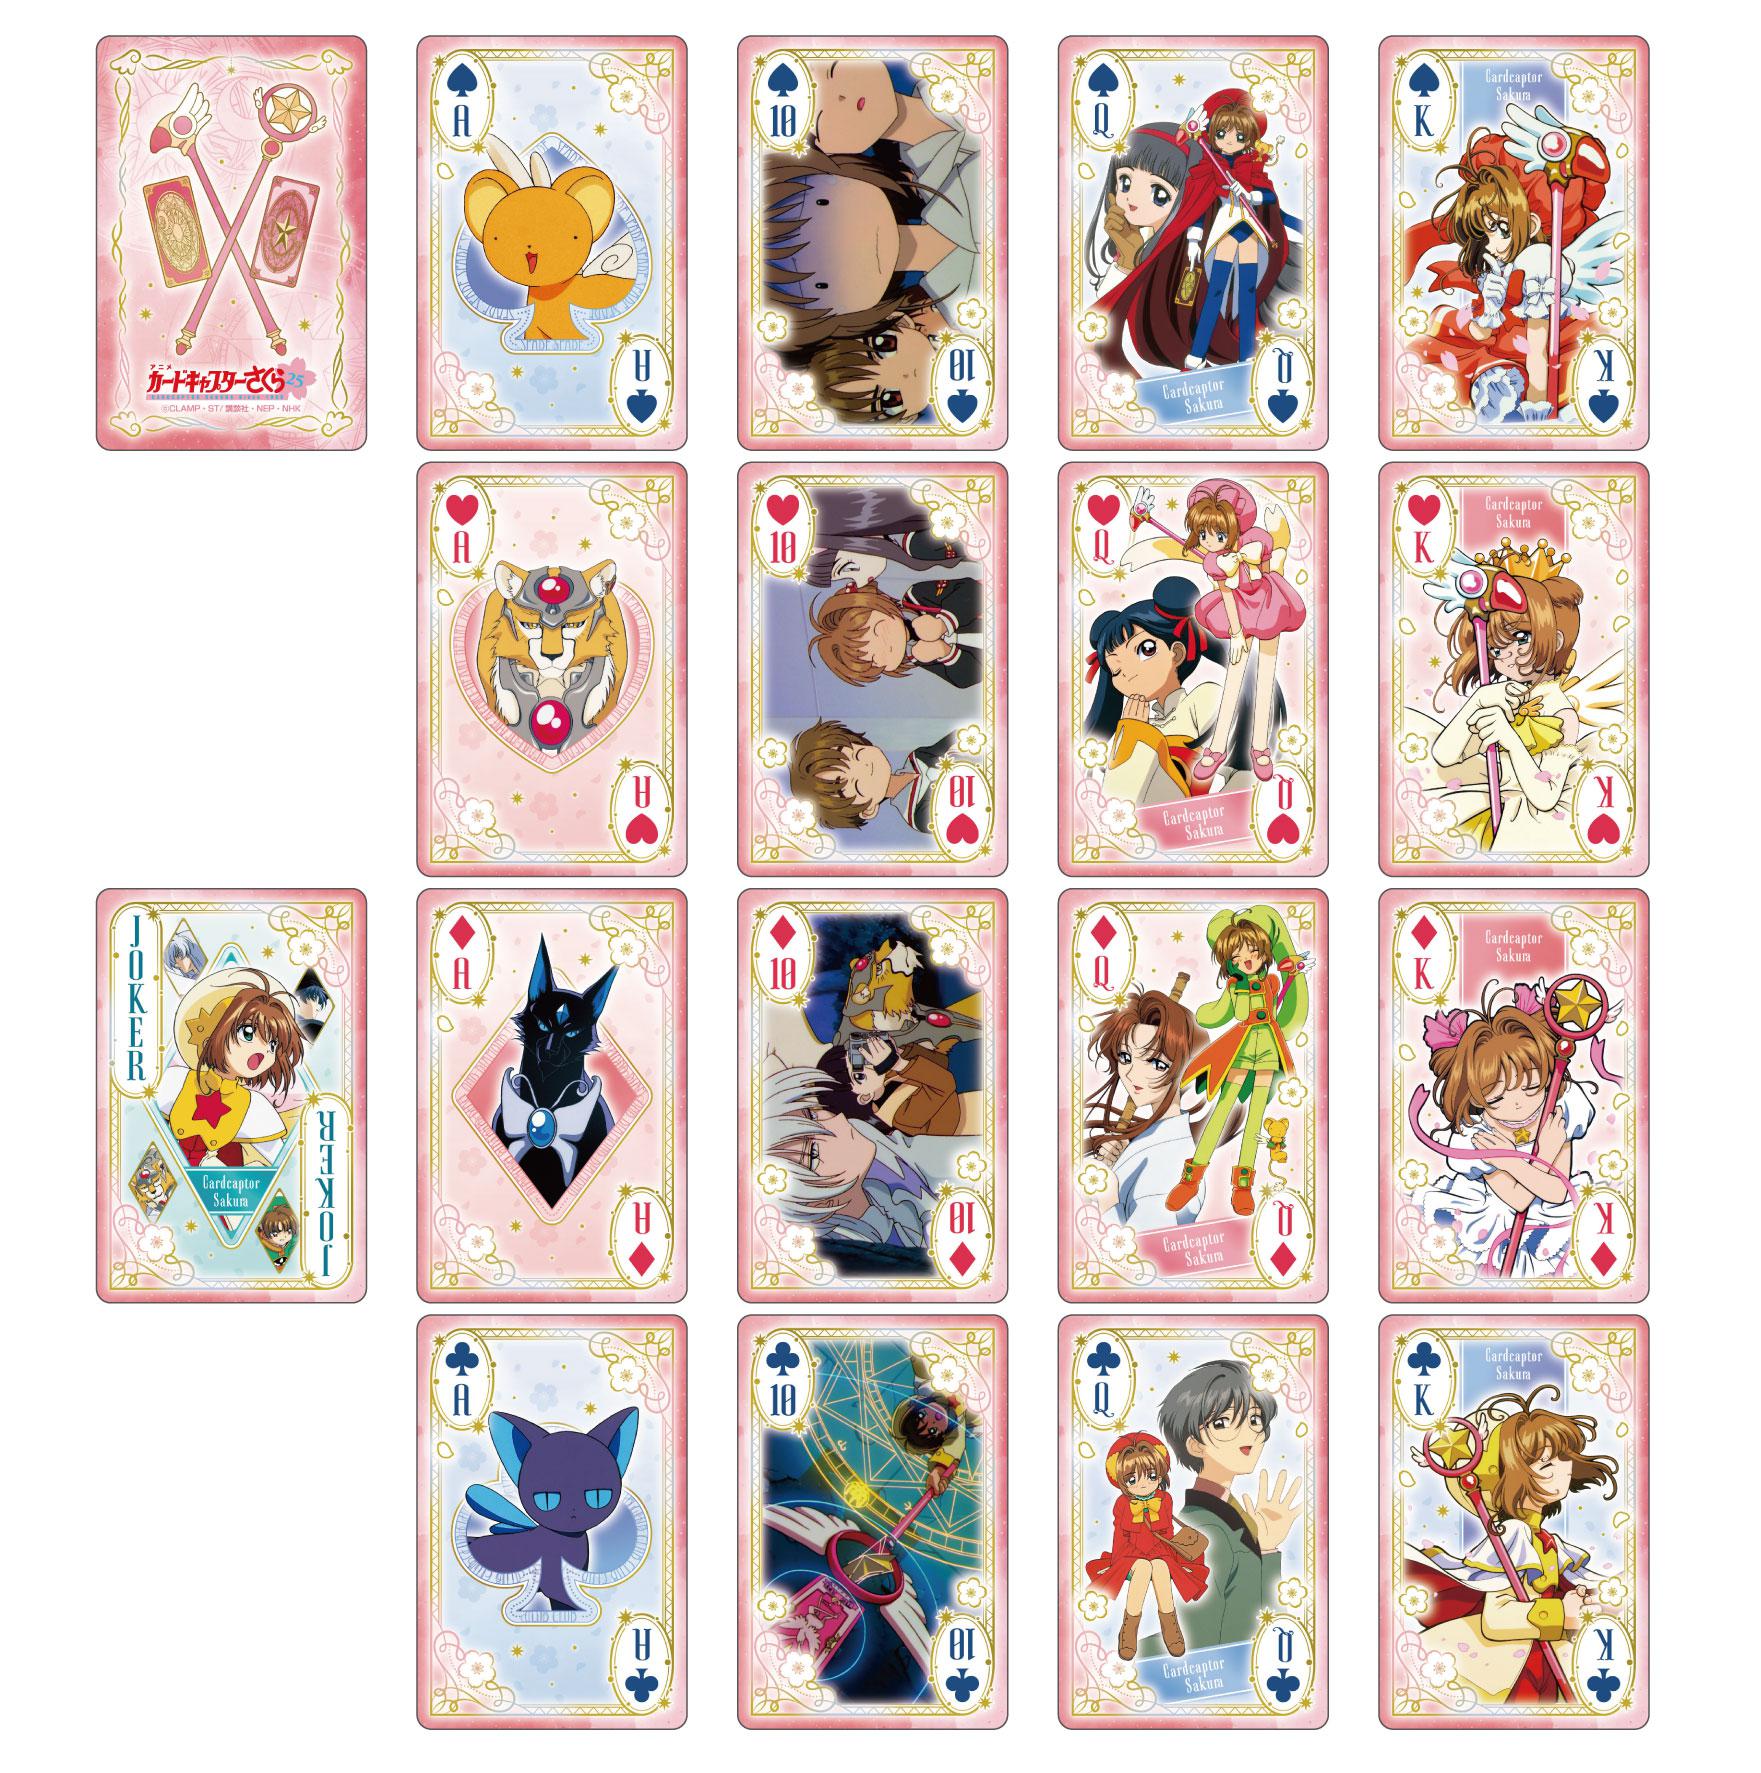 Cardcaptor Sakura: Playing Cards